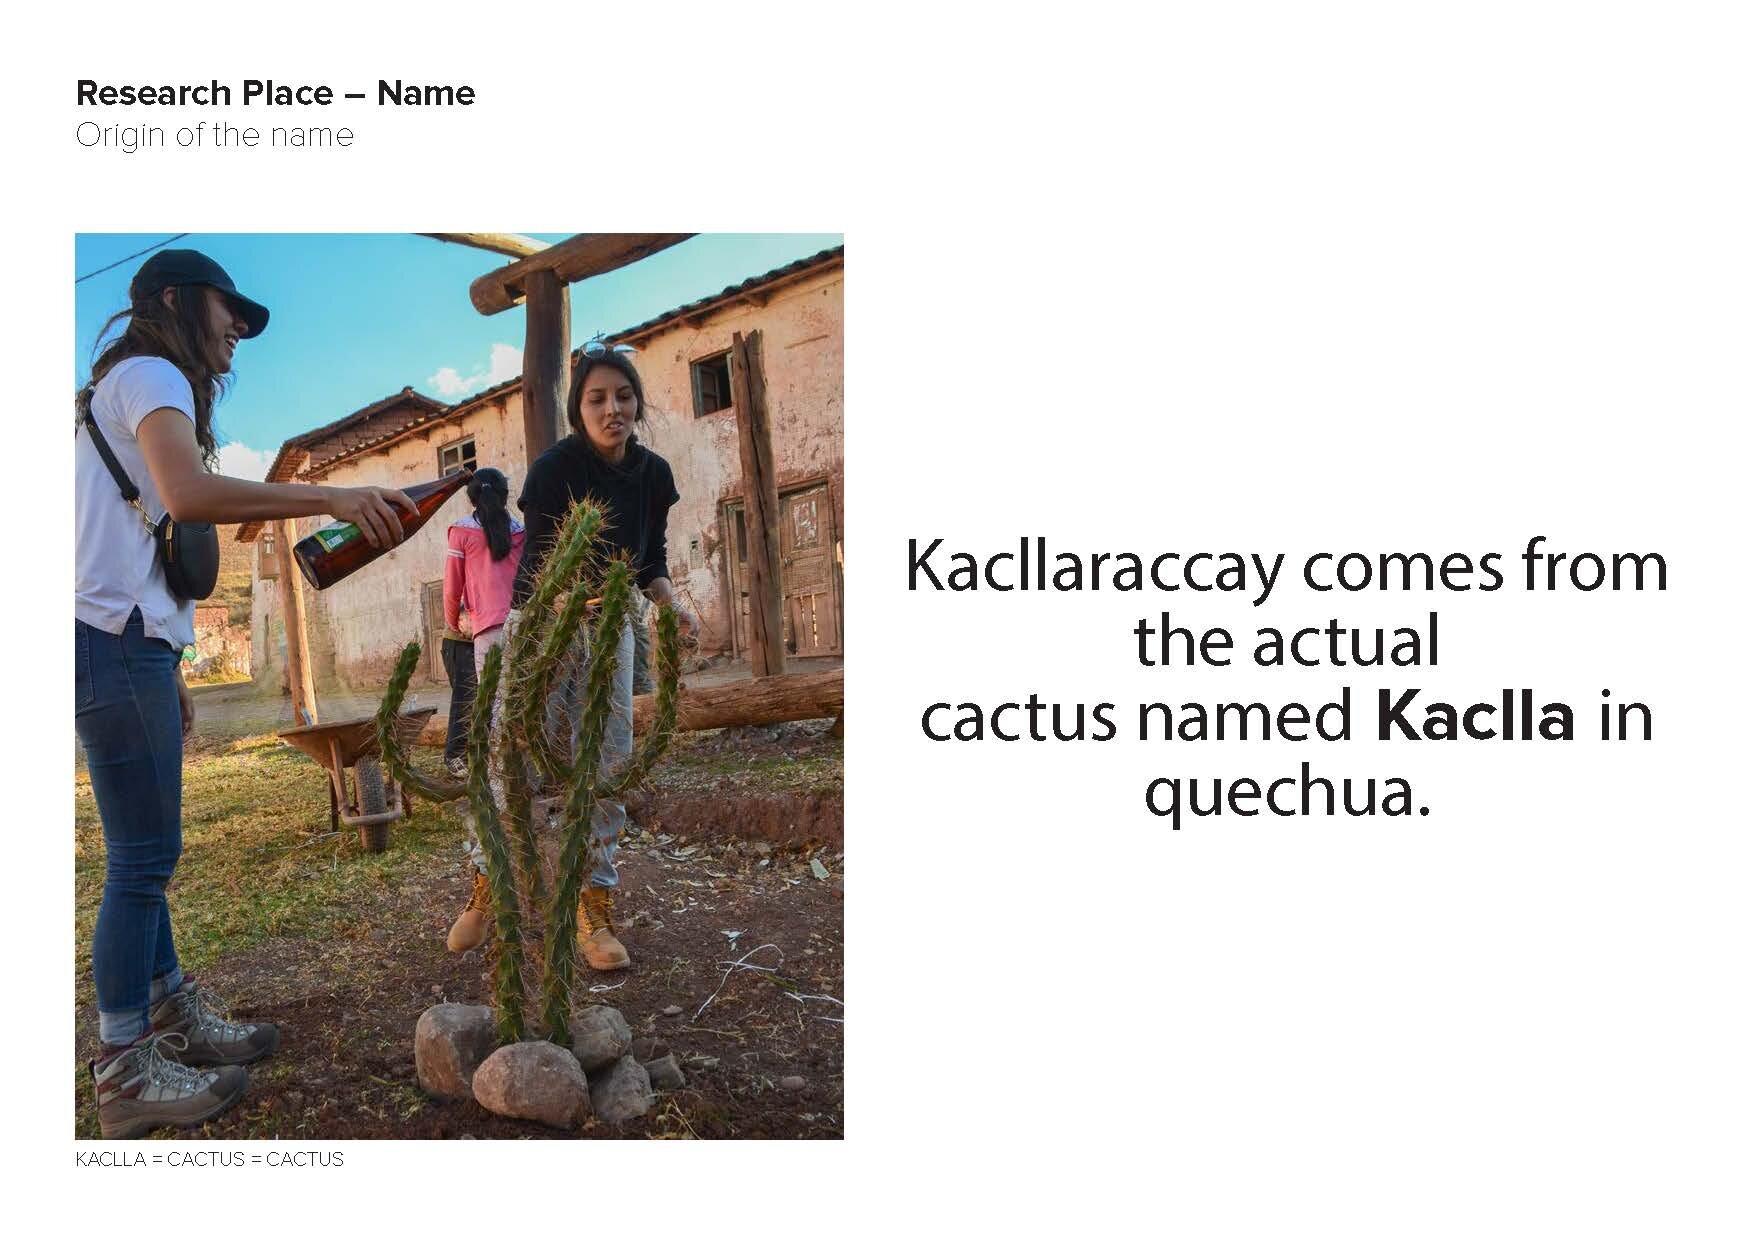 AA nanotourism Visiting School 2019 Peru - Kacllaraccay OpenPatios - final presentation_Seite_02.jpg